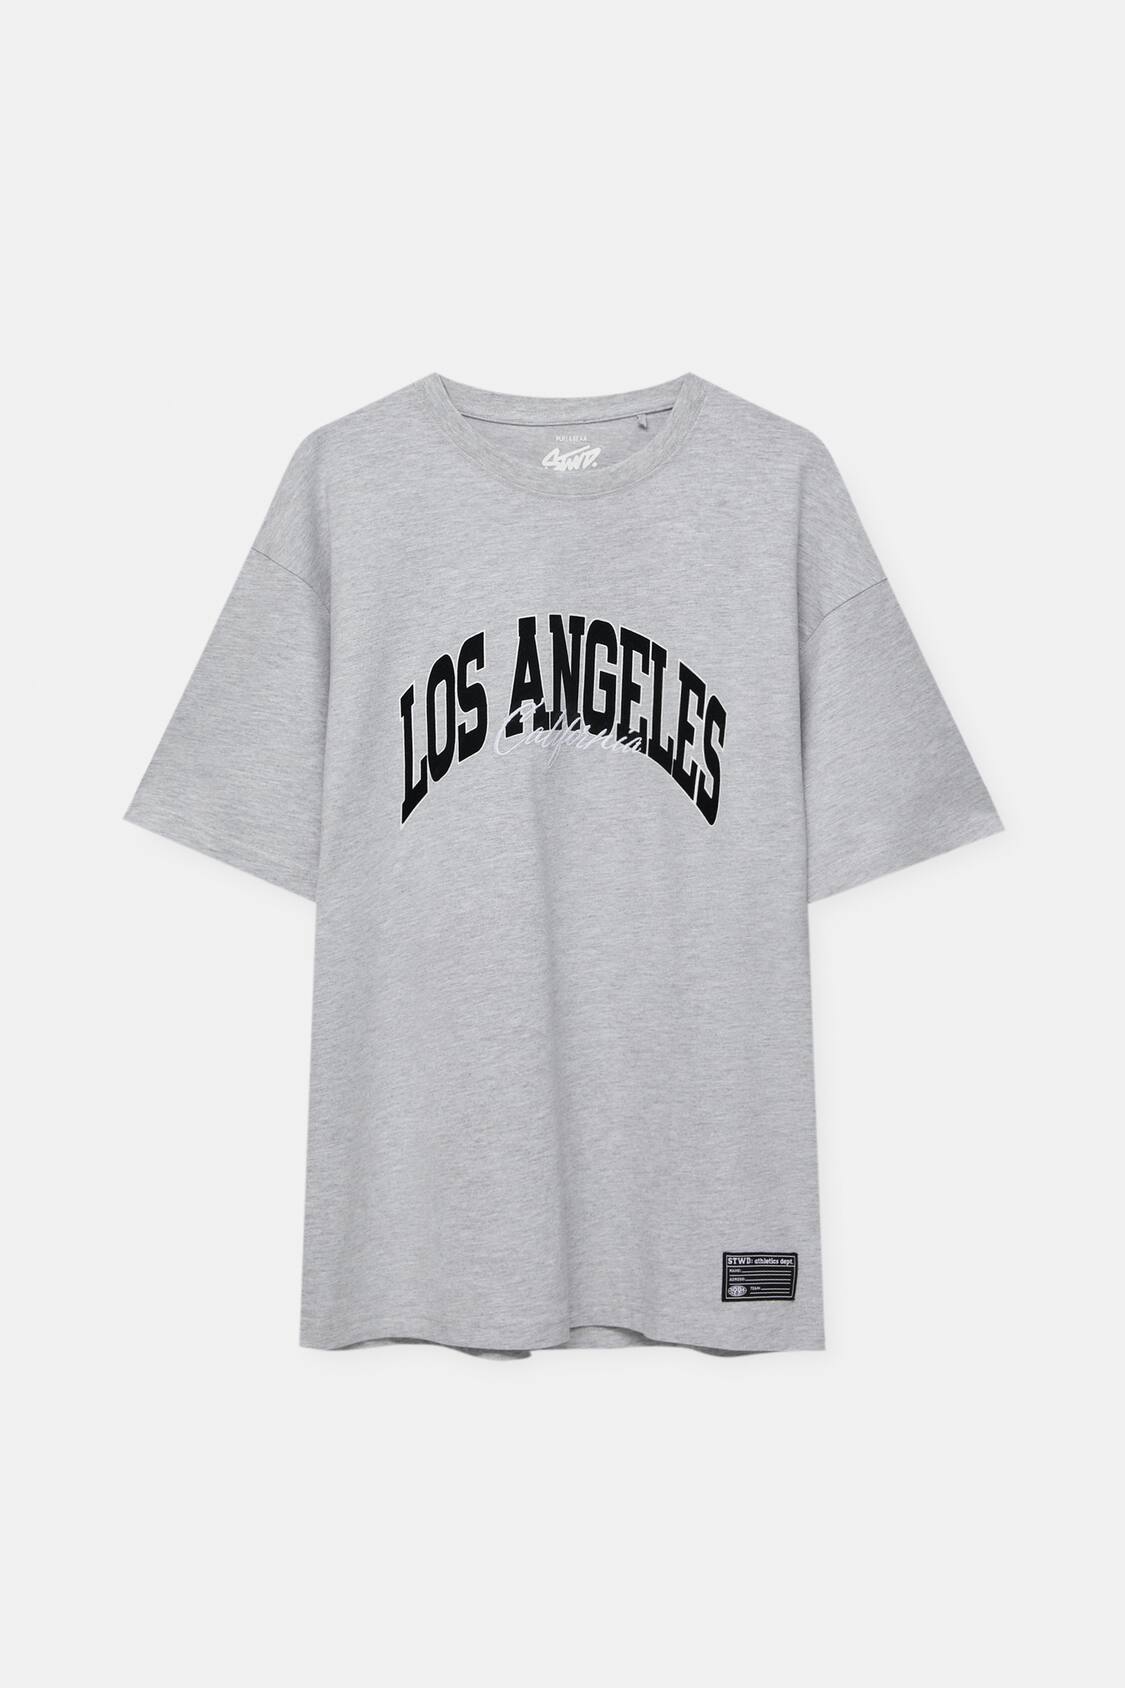 Los Angeles print T-shirt - pull&bear